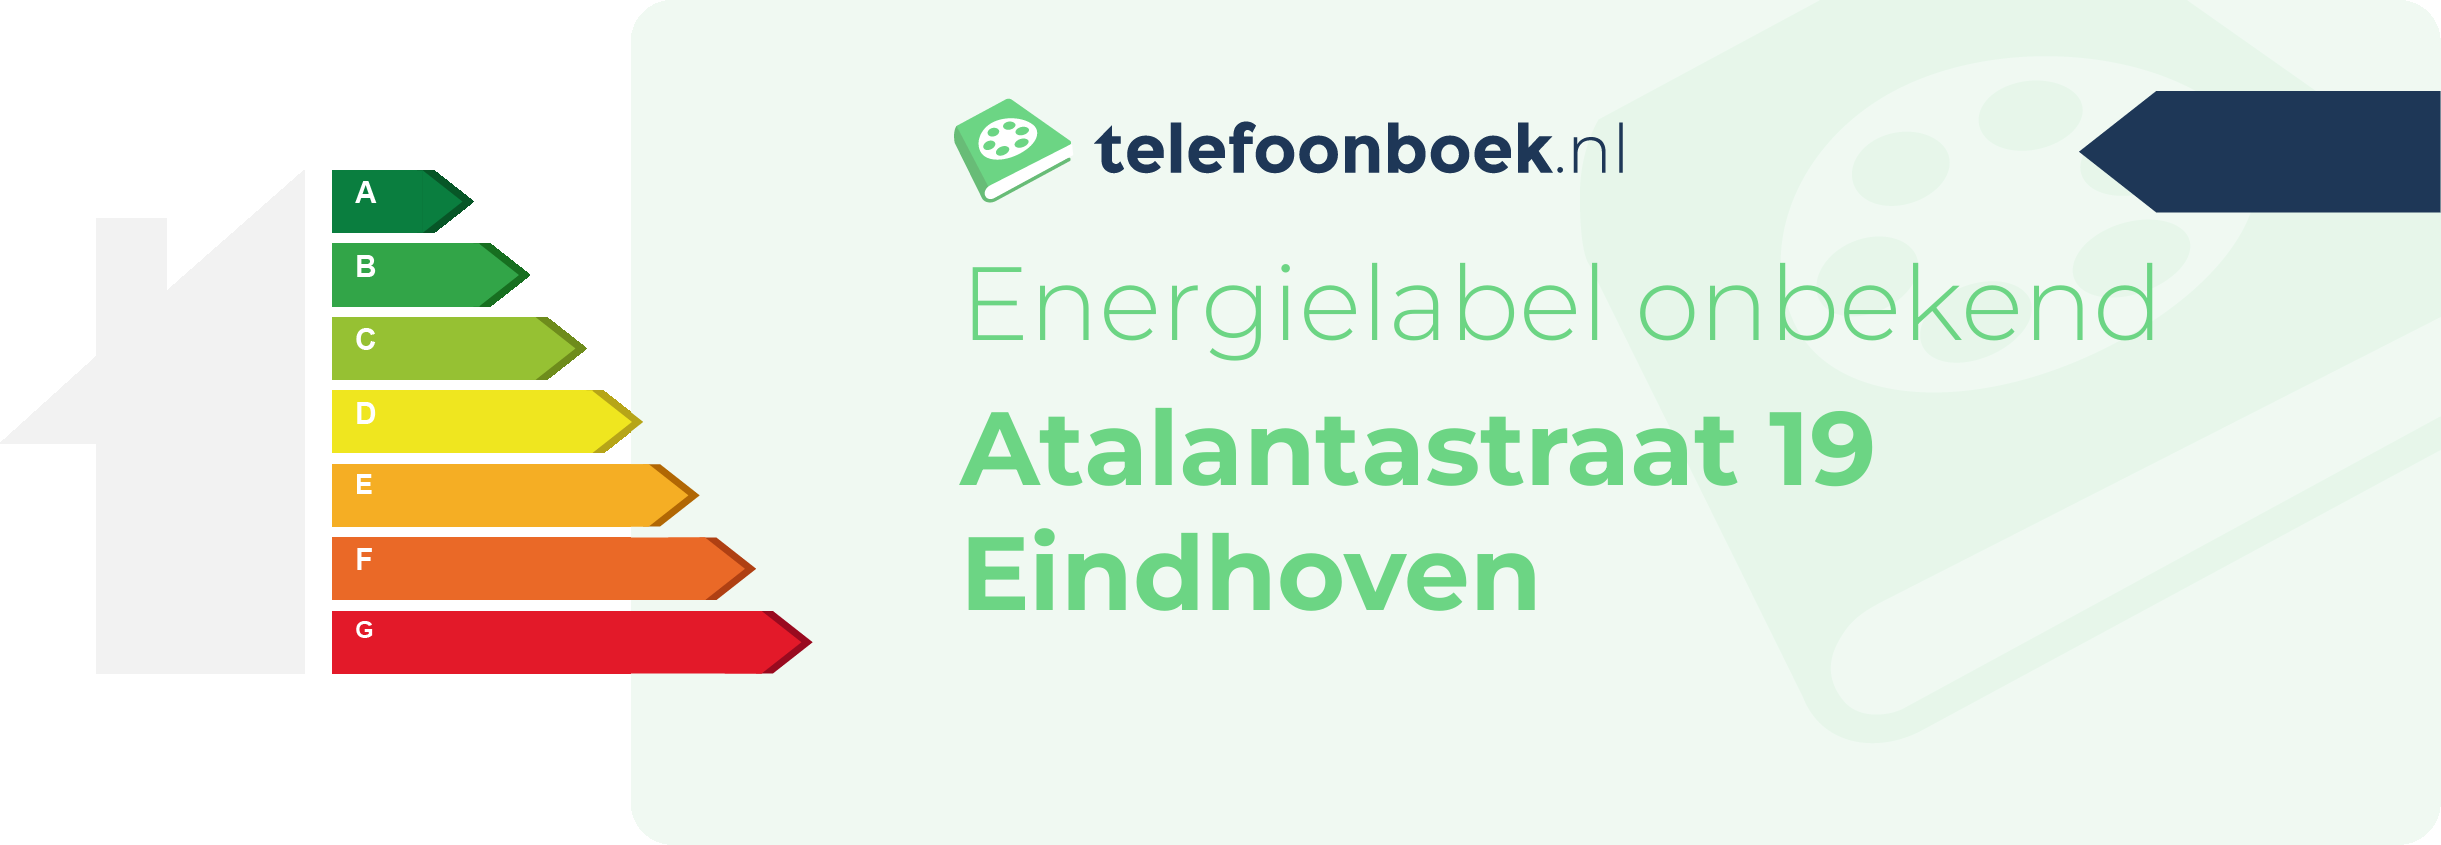 Energielabel Atalantastraat 19 Eindhoven